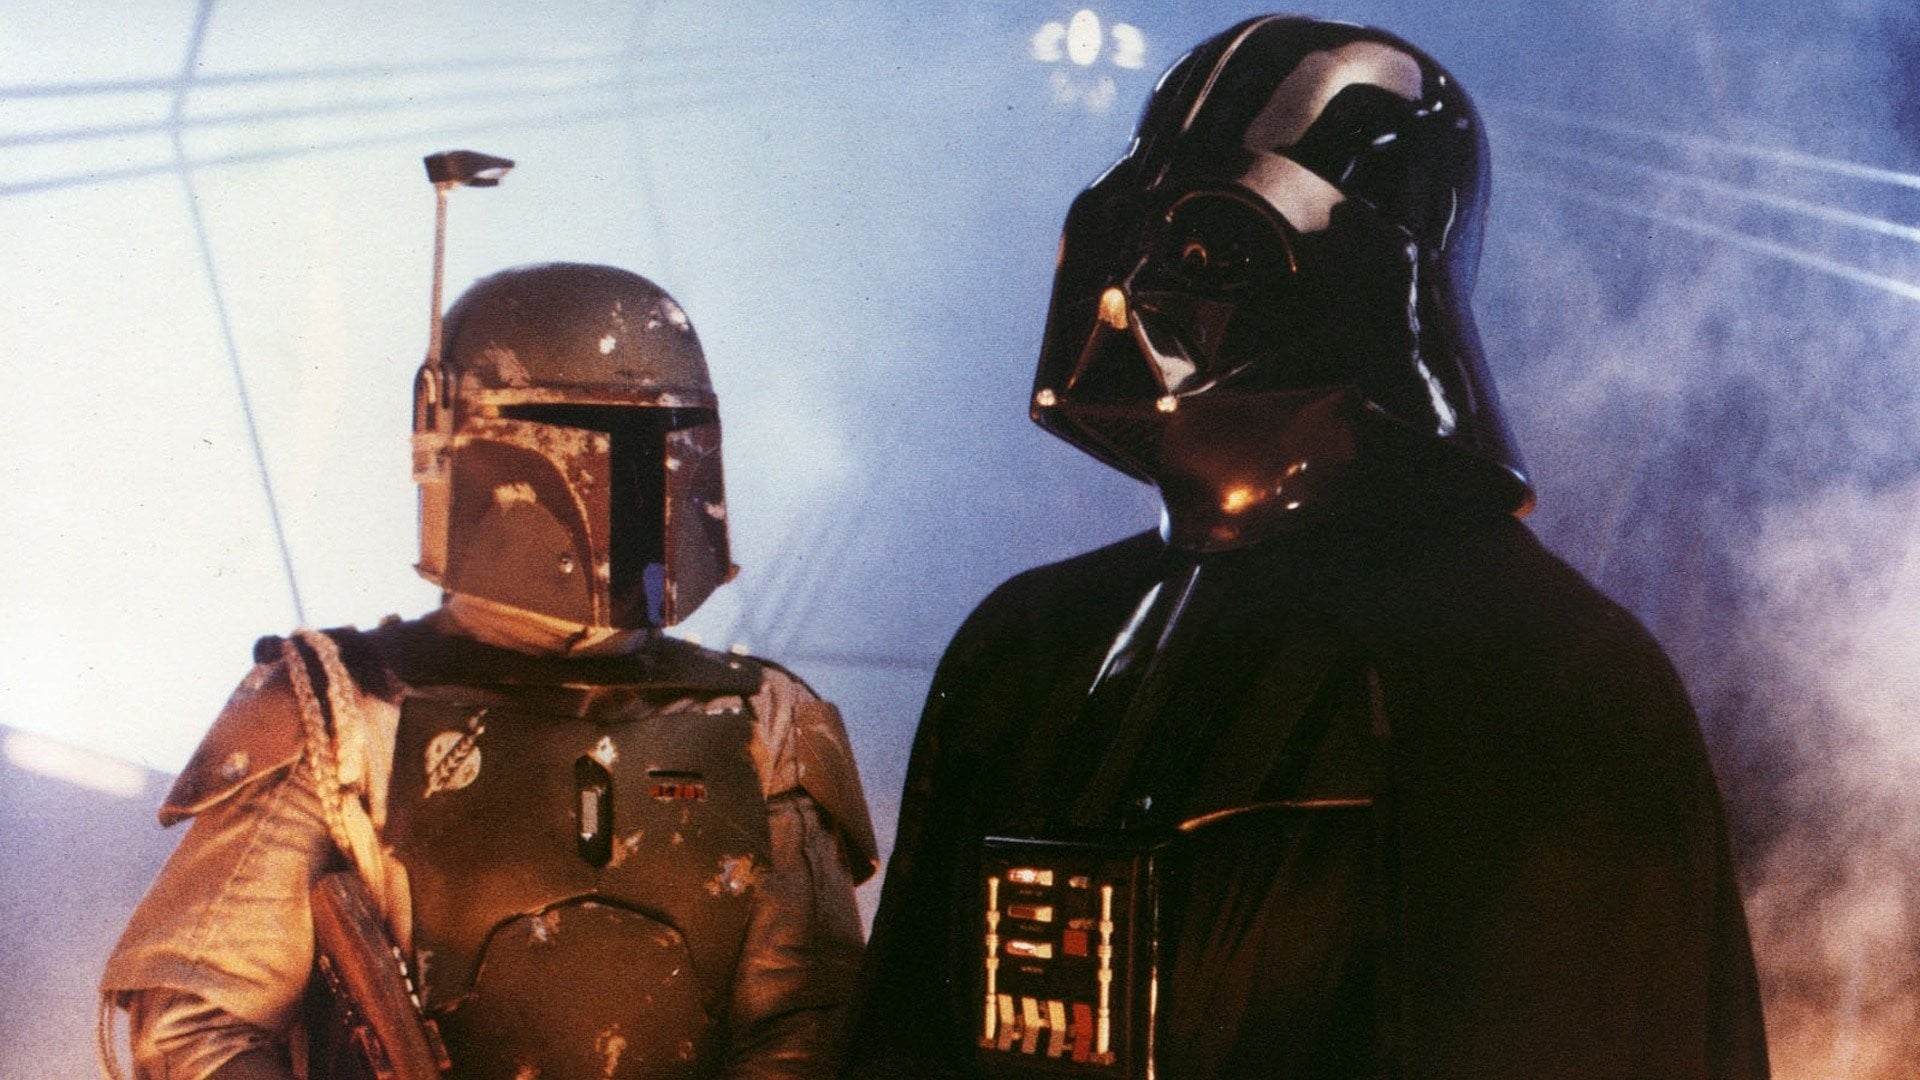 Image du film Star Wars Episode V : l'Empire contre-attaque ry1jvgx3kckufqocptuapuxxrvijpg